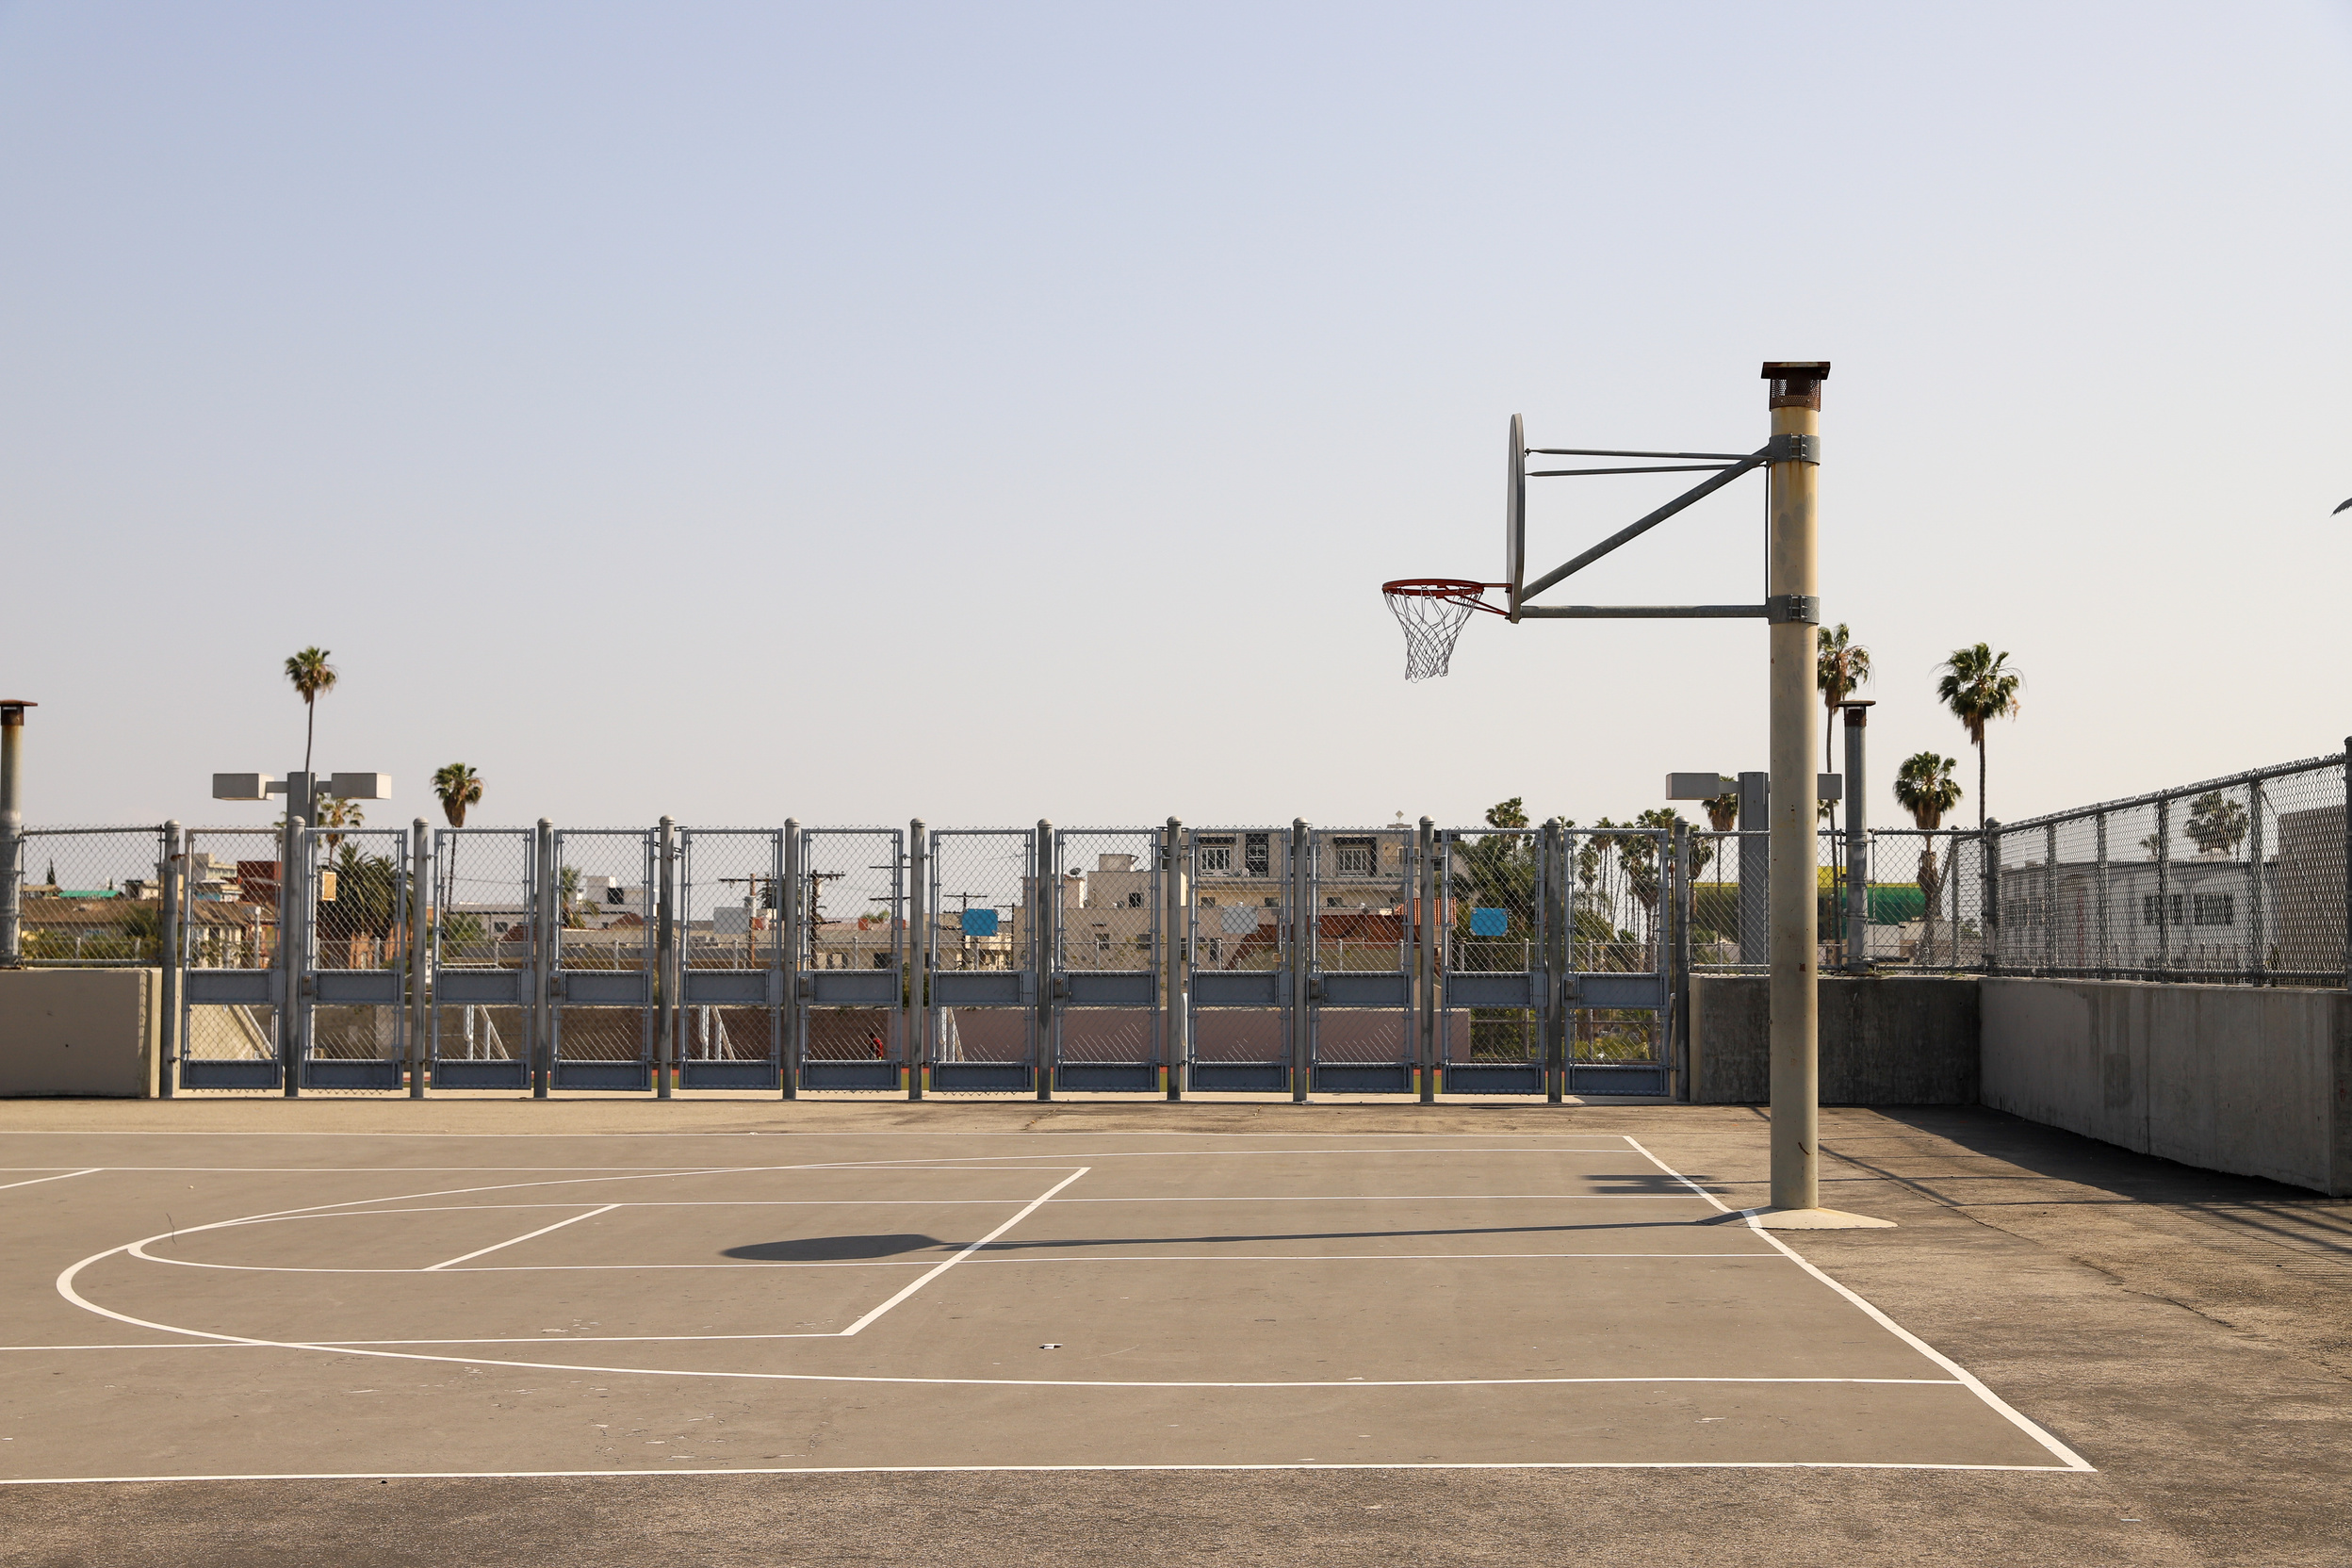 Empty Basketball Court